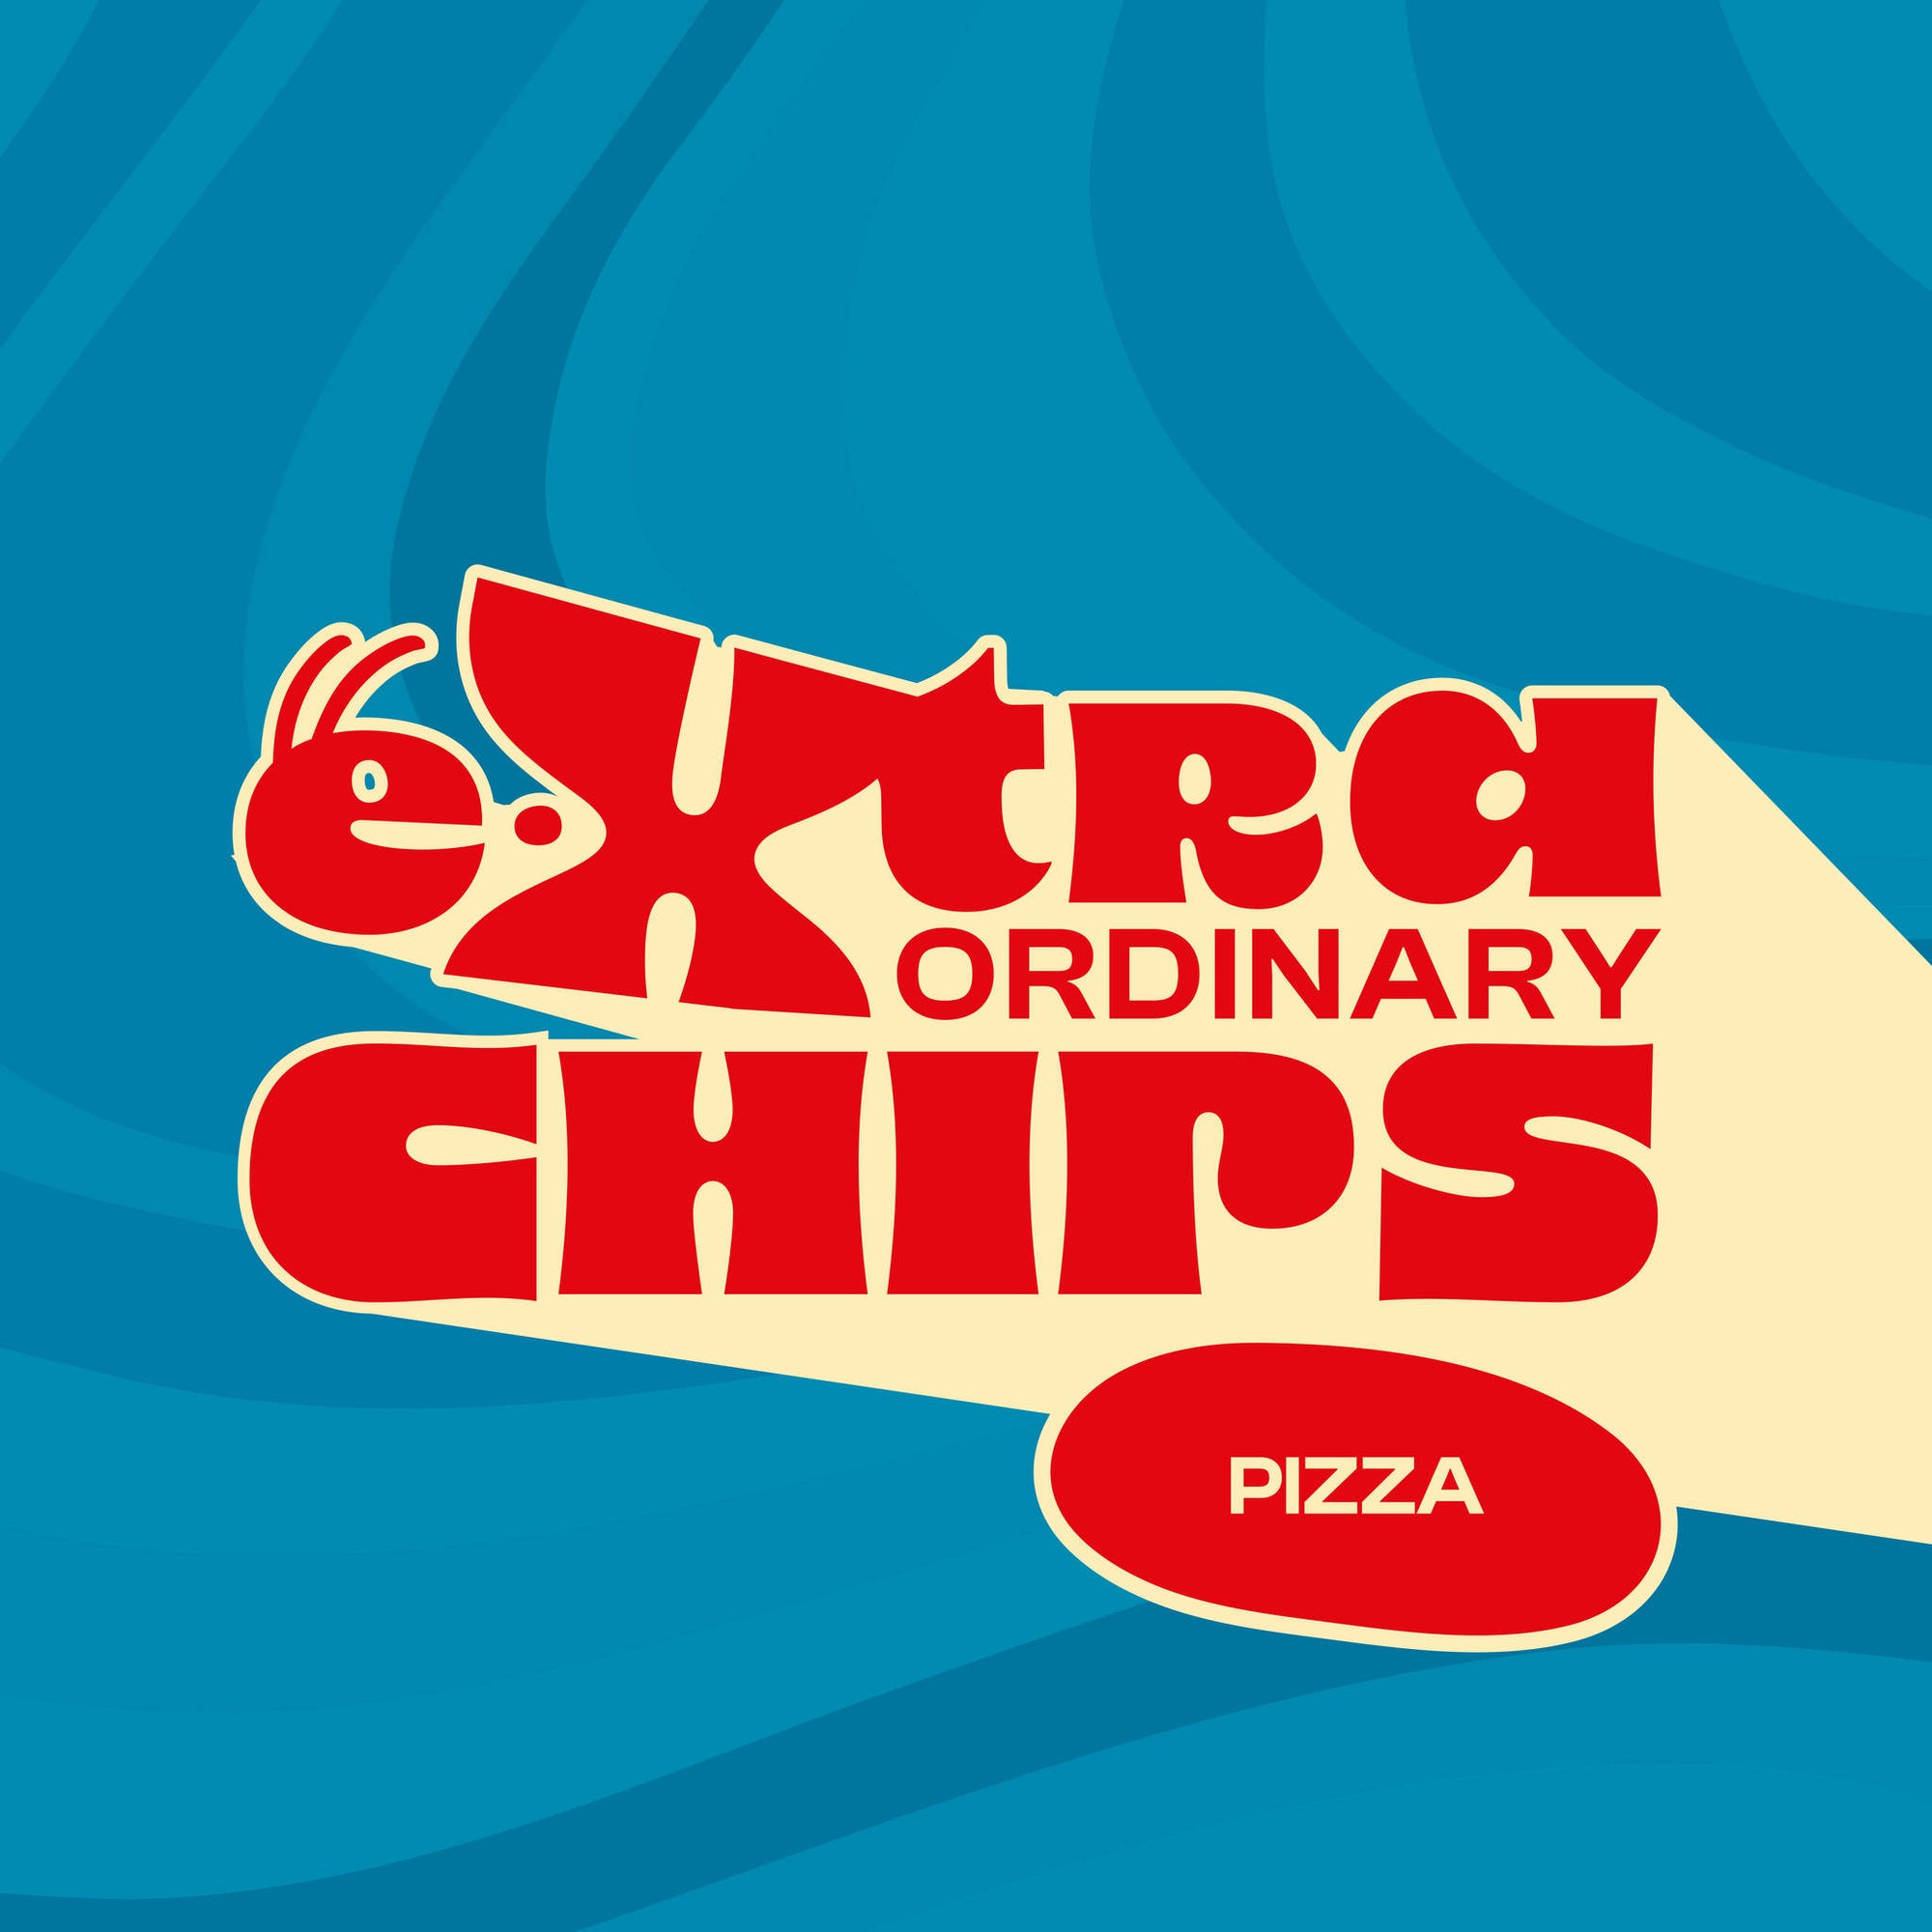 extra-ordinary Chips gusto Pizza